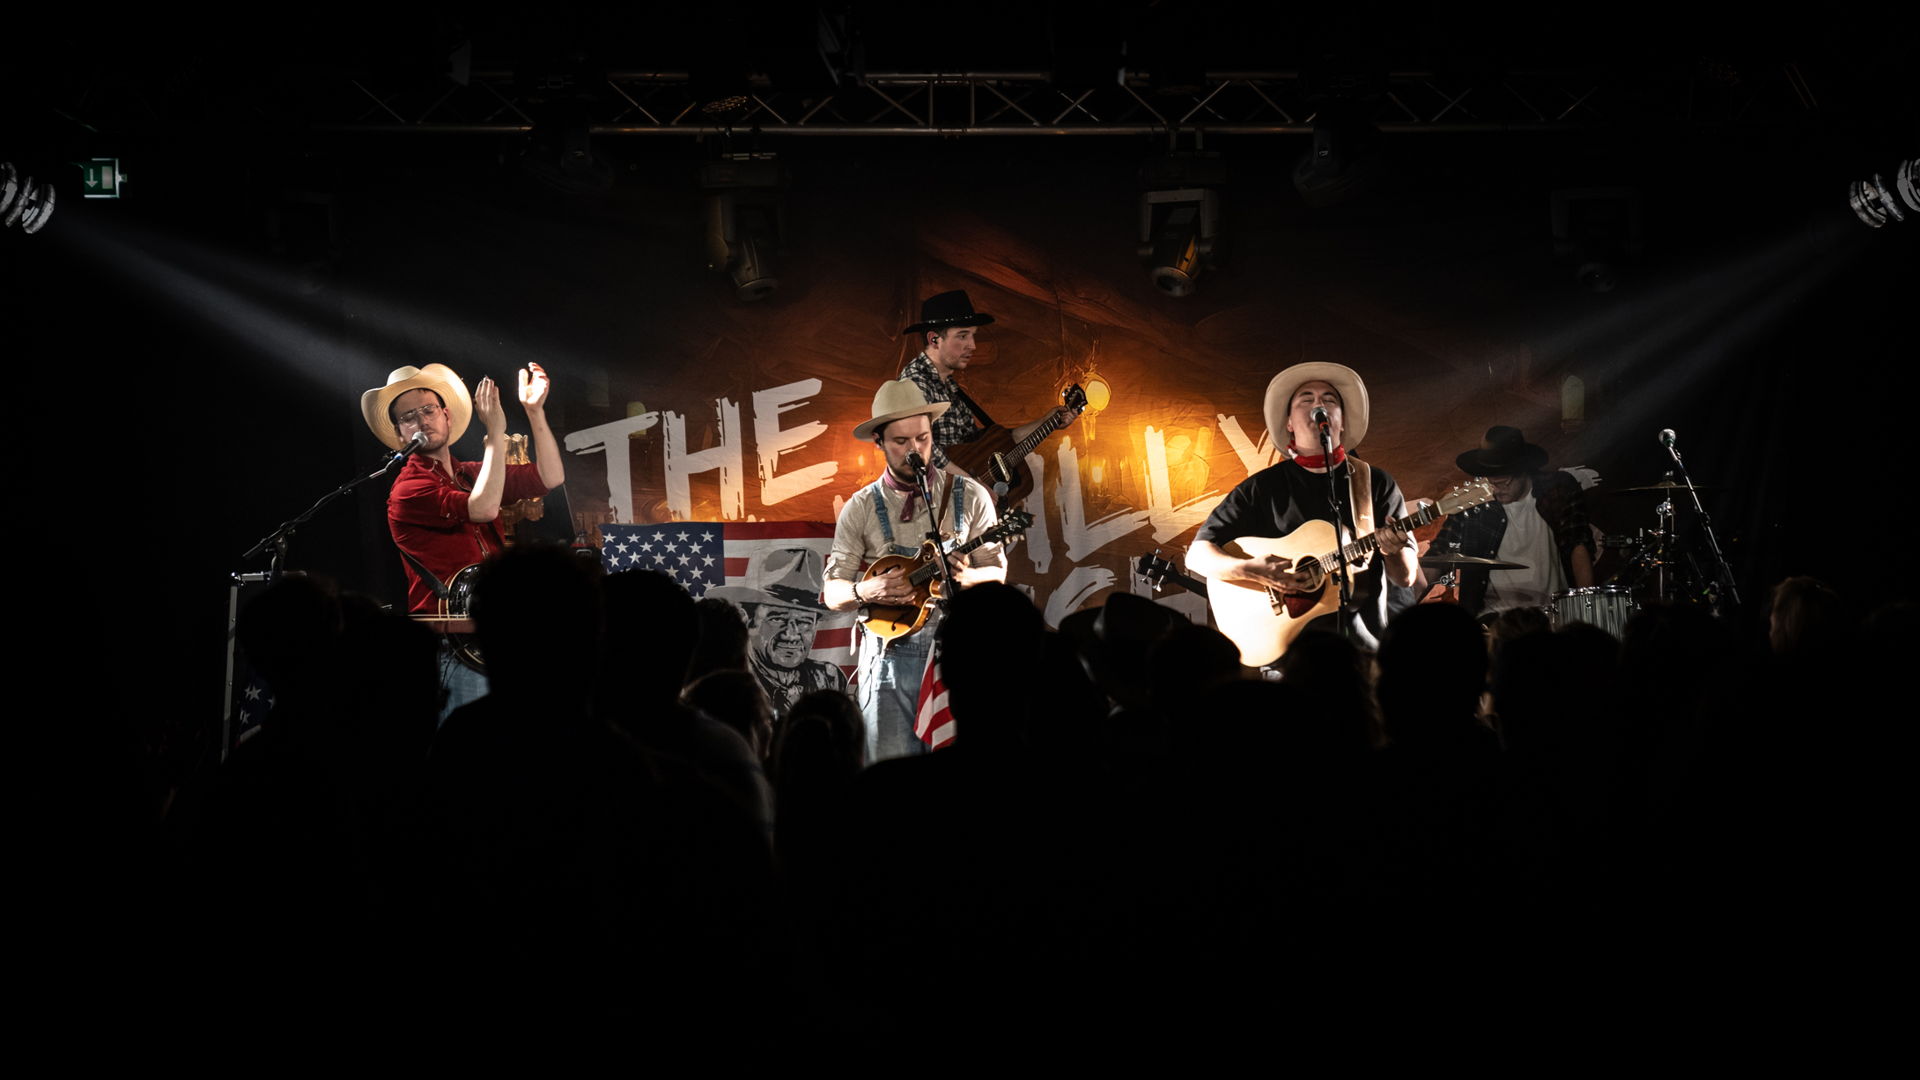 The Hillbilly Moonshiners - 2023 in Het Podium - Photo Anya